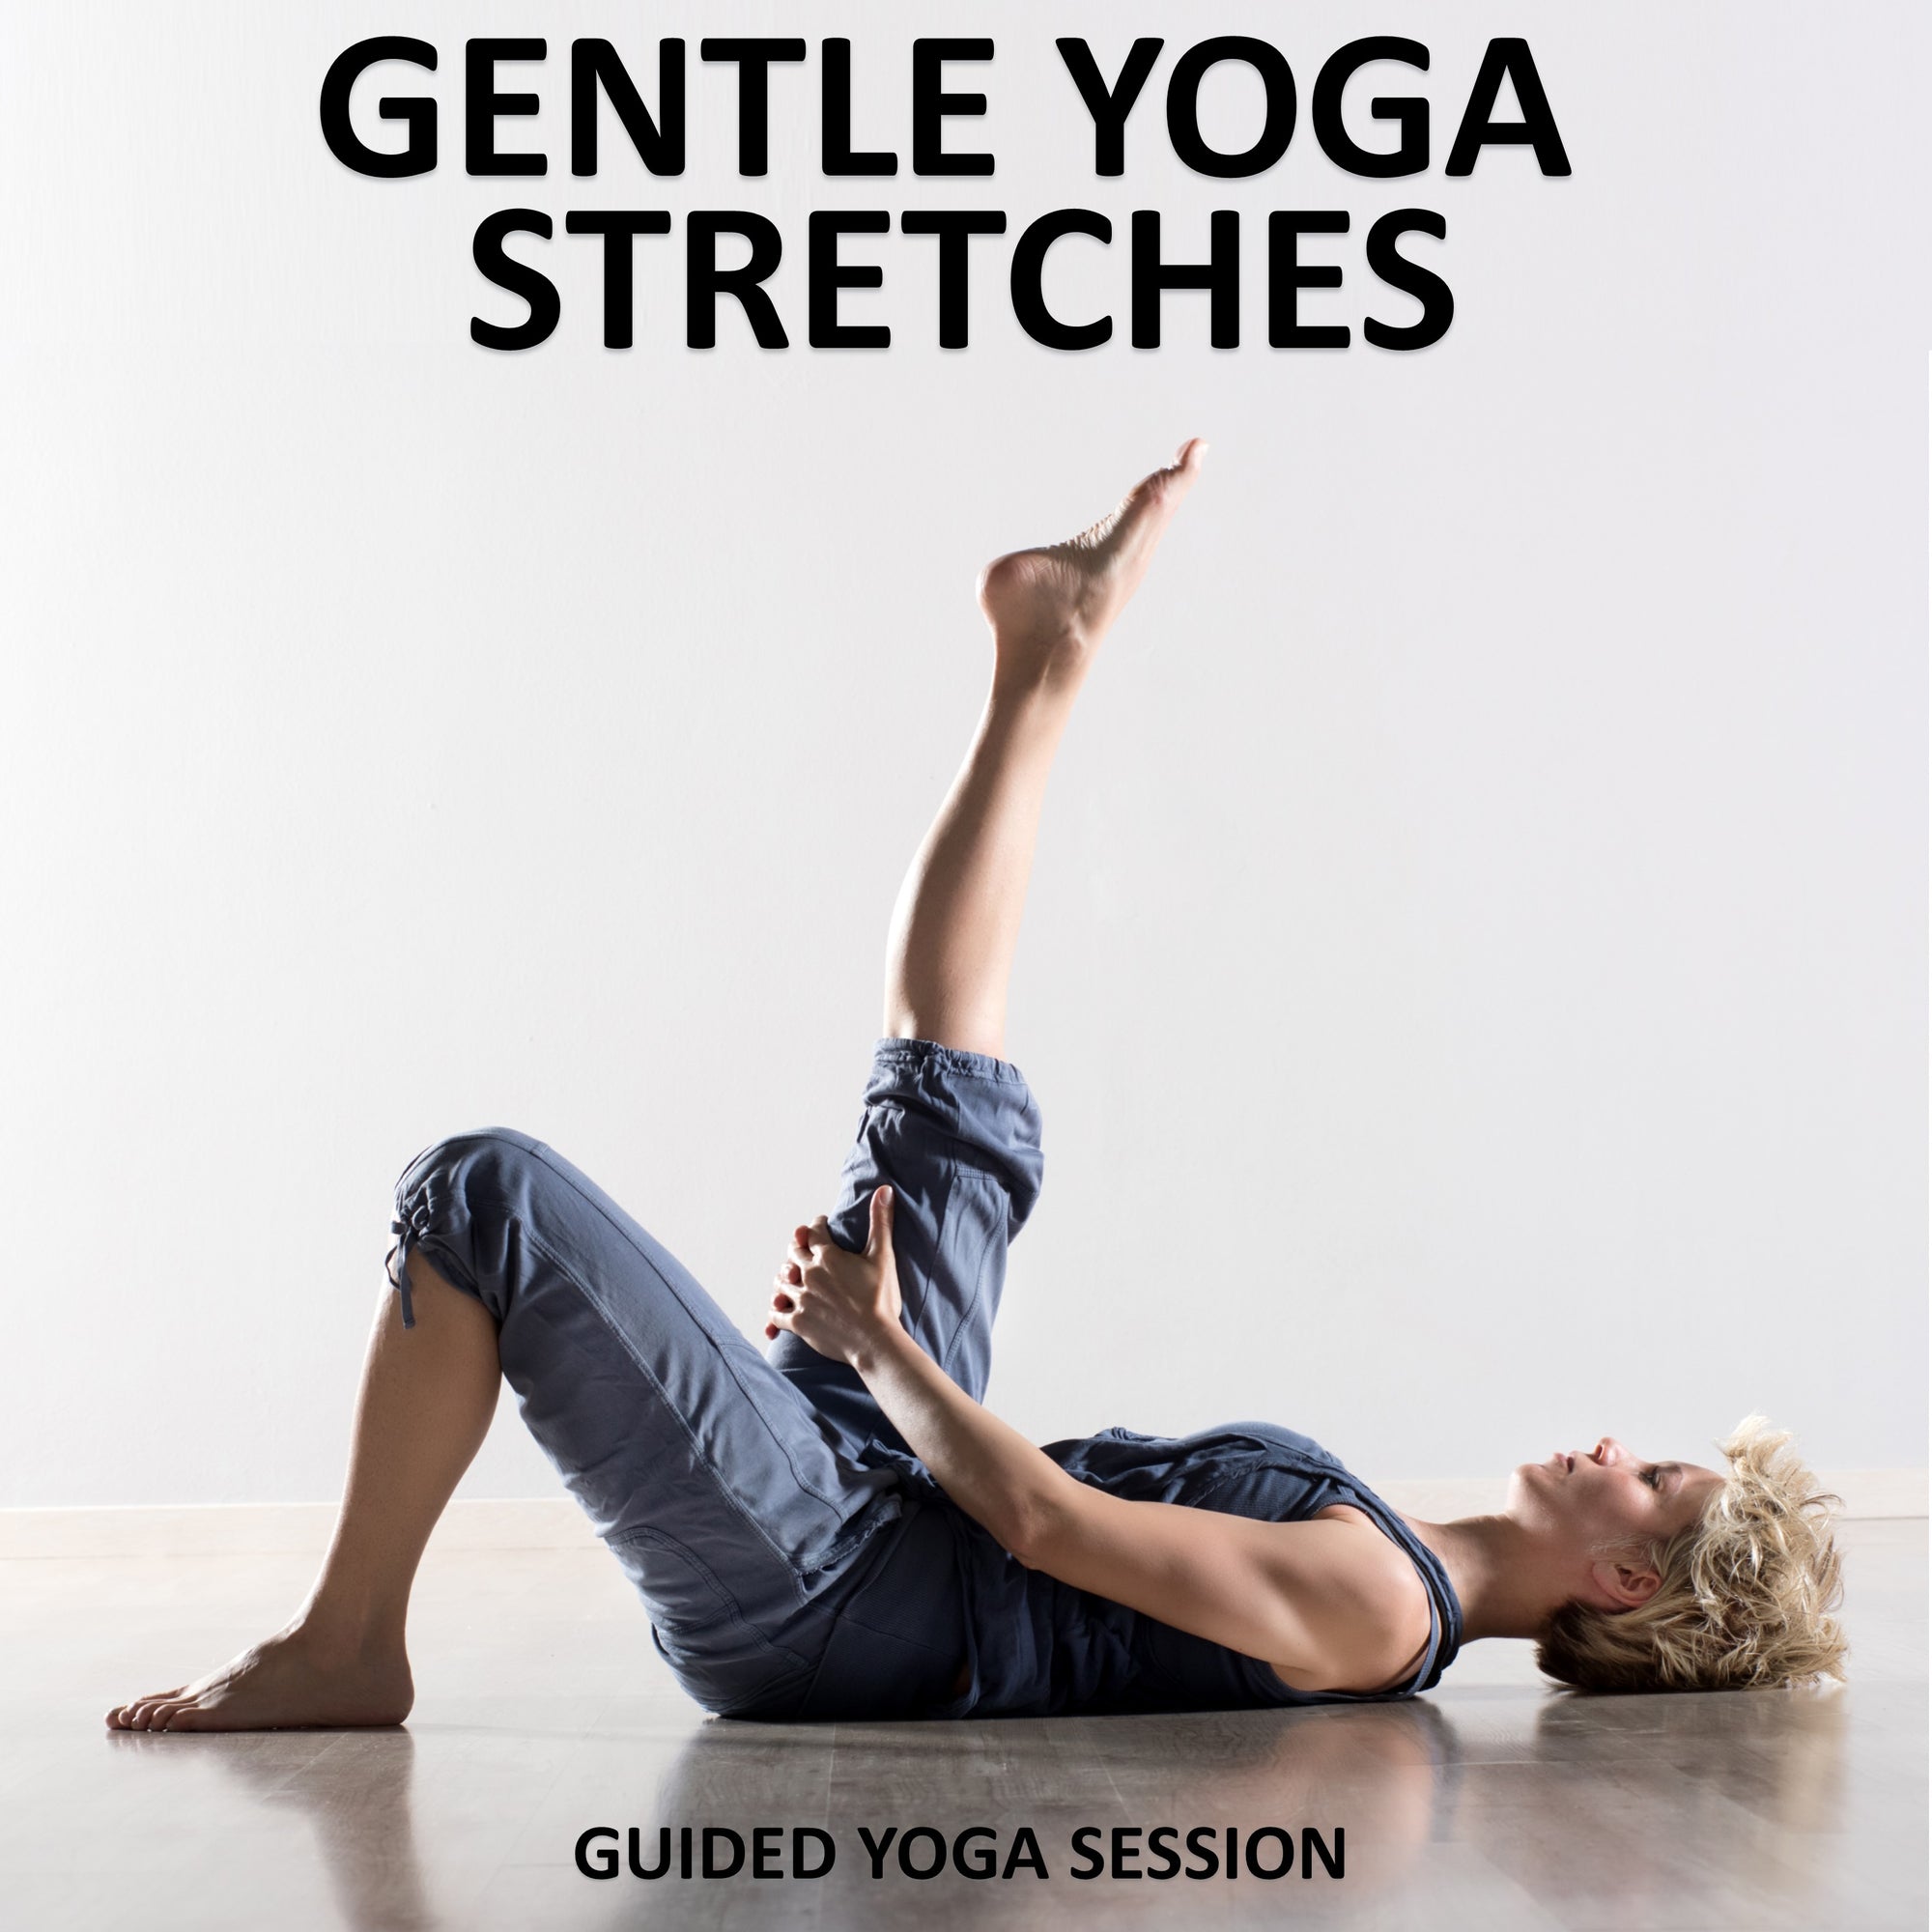 Gentle Yoga  Yoga 2 Hear